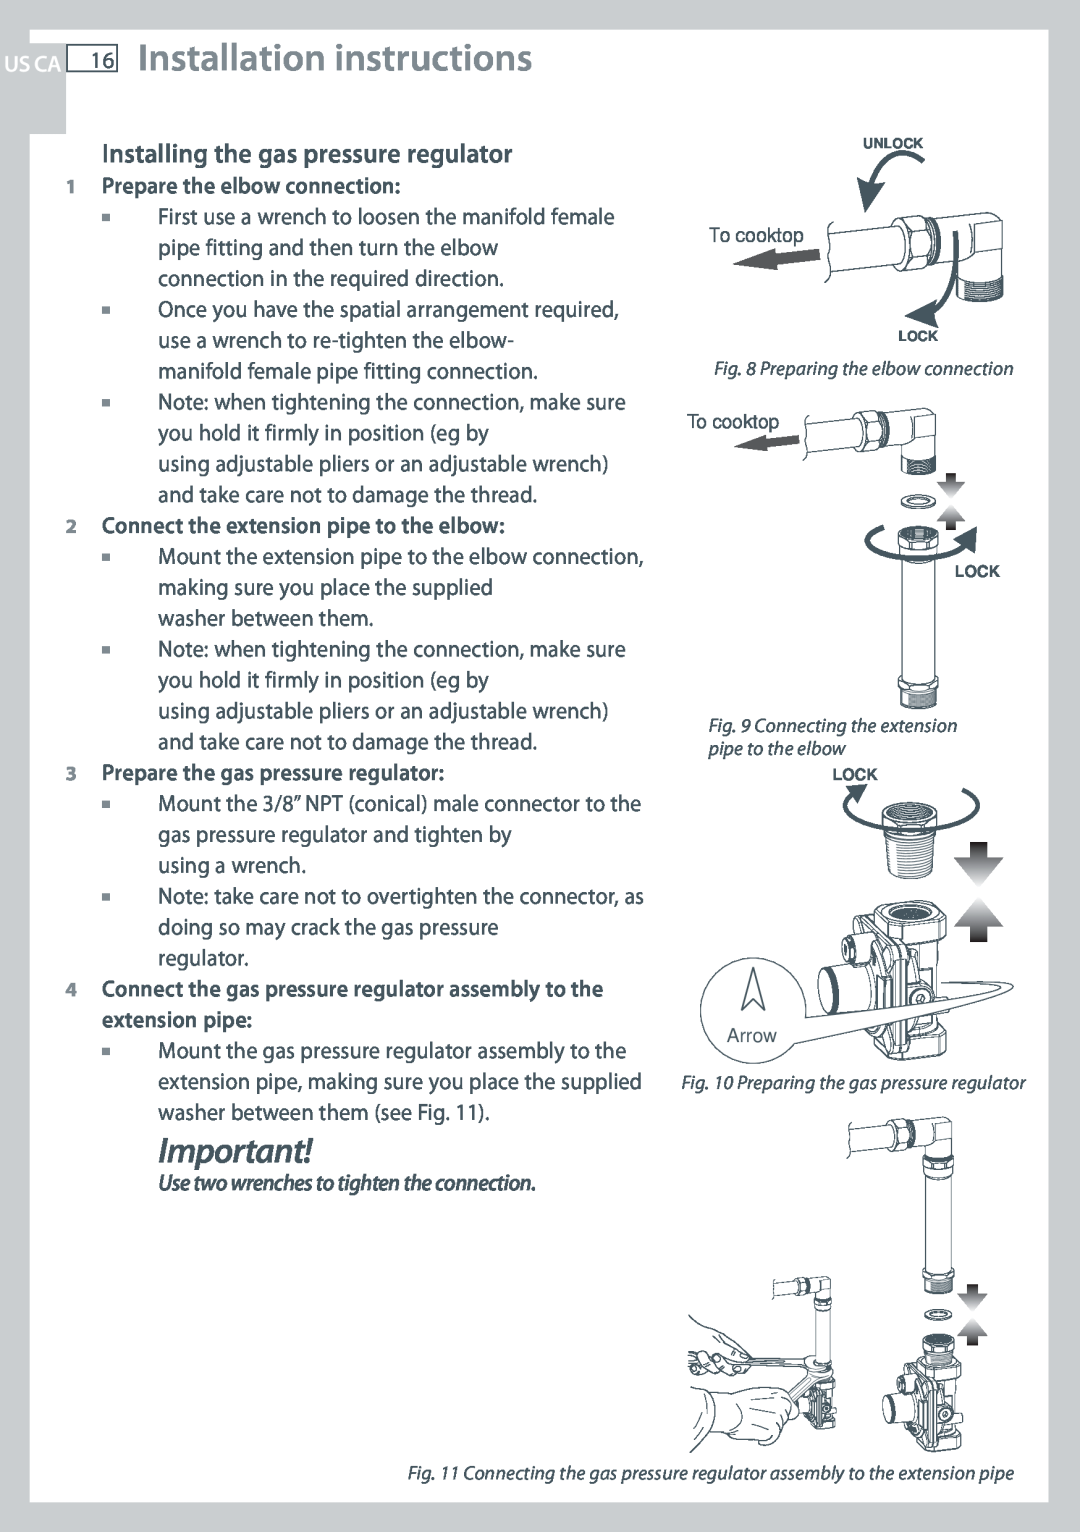 Fisher & Paykel CG244, CG122 US CA 16 Installation instructions, Installing the gas pressure regulator 